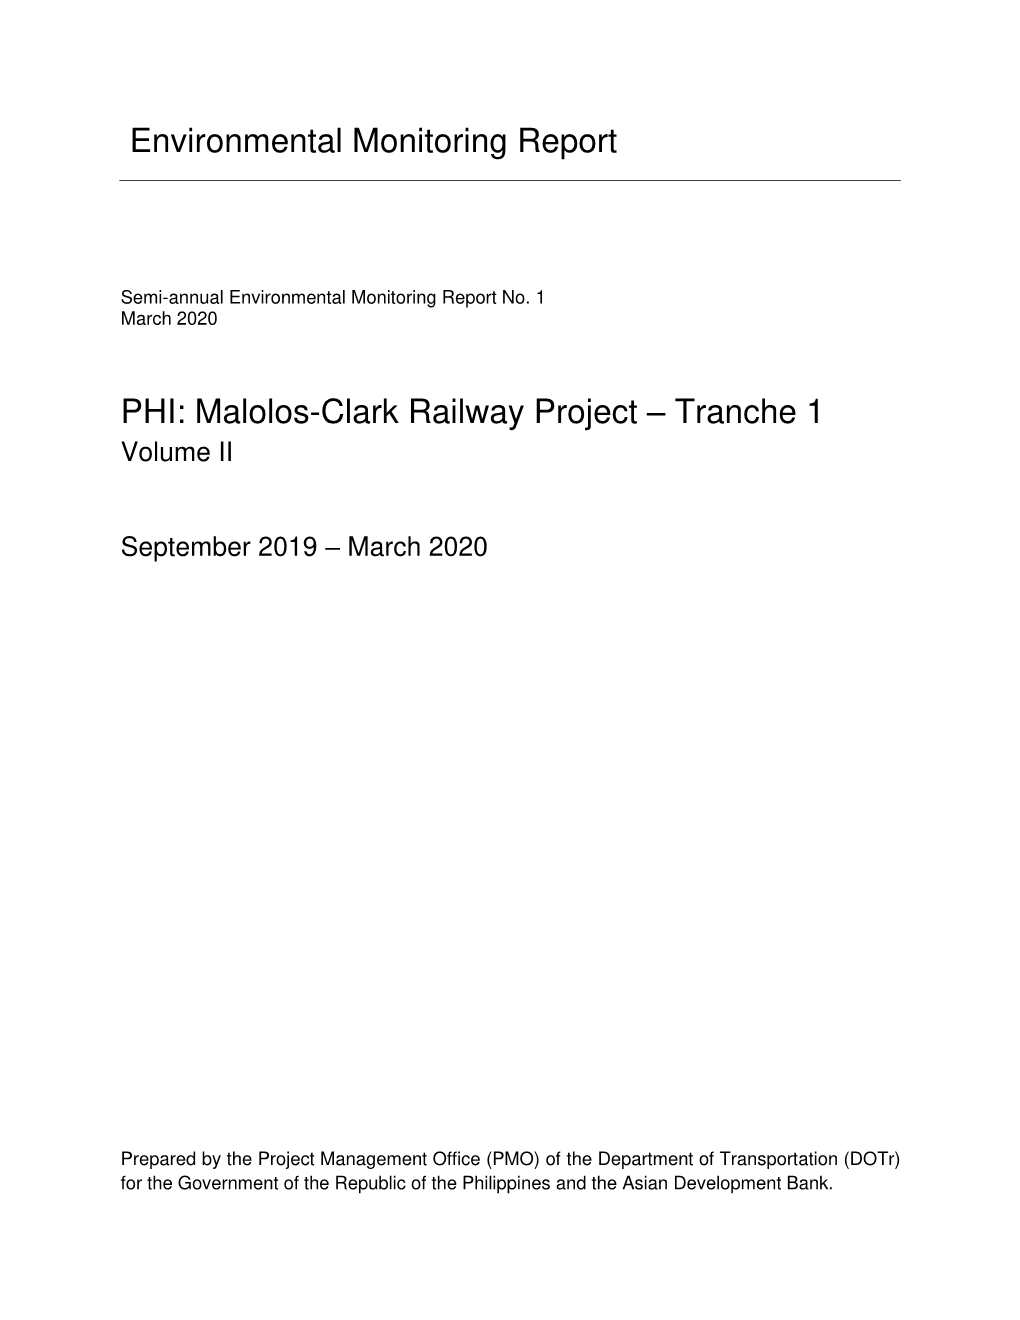 52083-002: Malolos-Clark Railway Project (PFR 1)